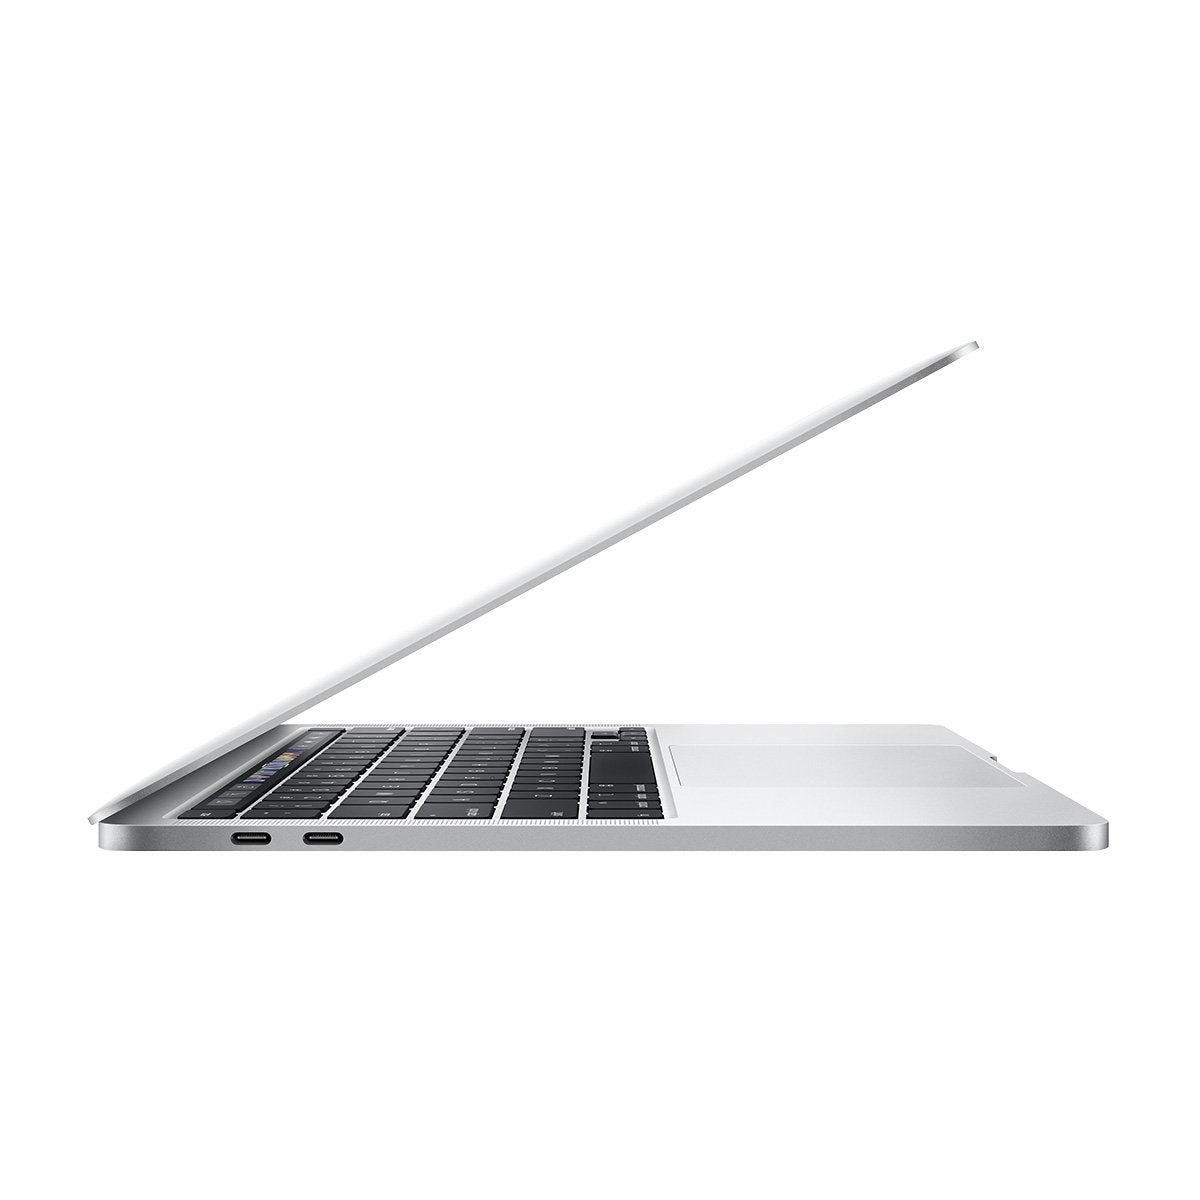 Macbook Pro 13-inch (Touchbar | four thunderbolt 3 ports) - 2018 - i5 - Silver